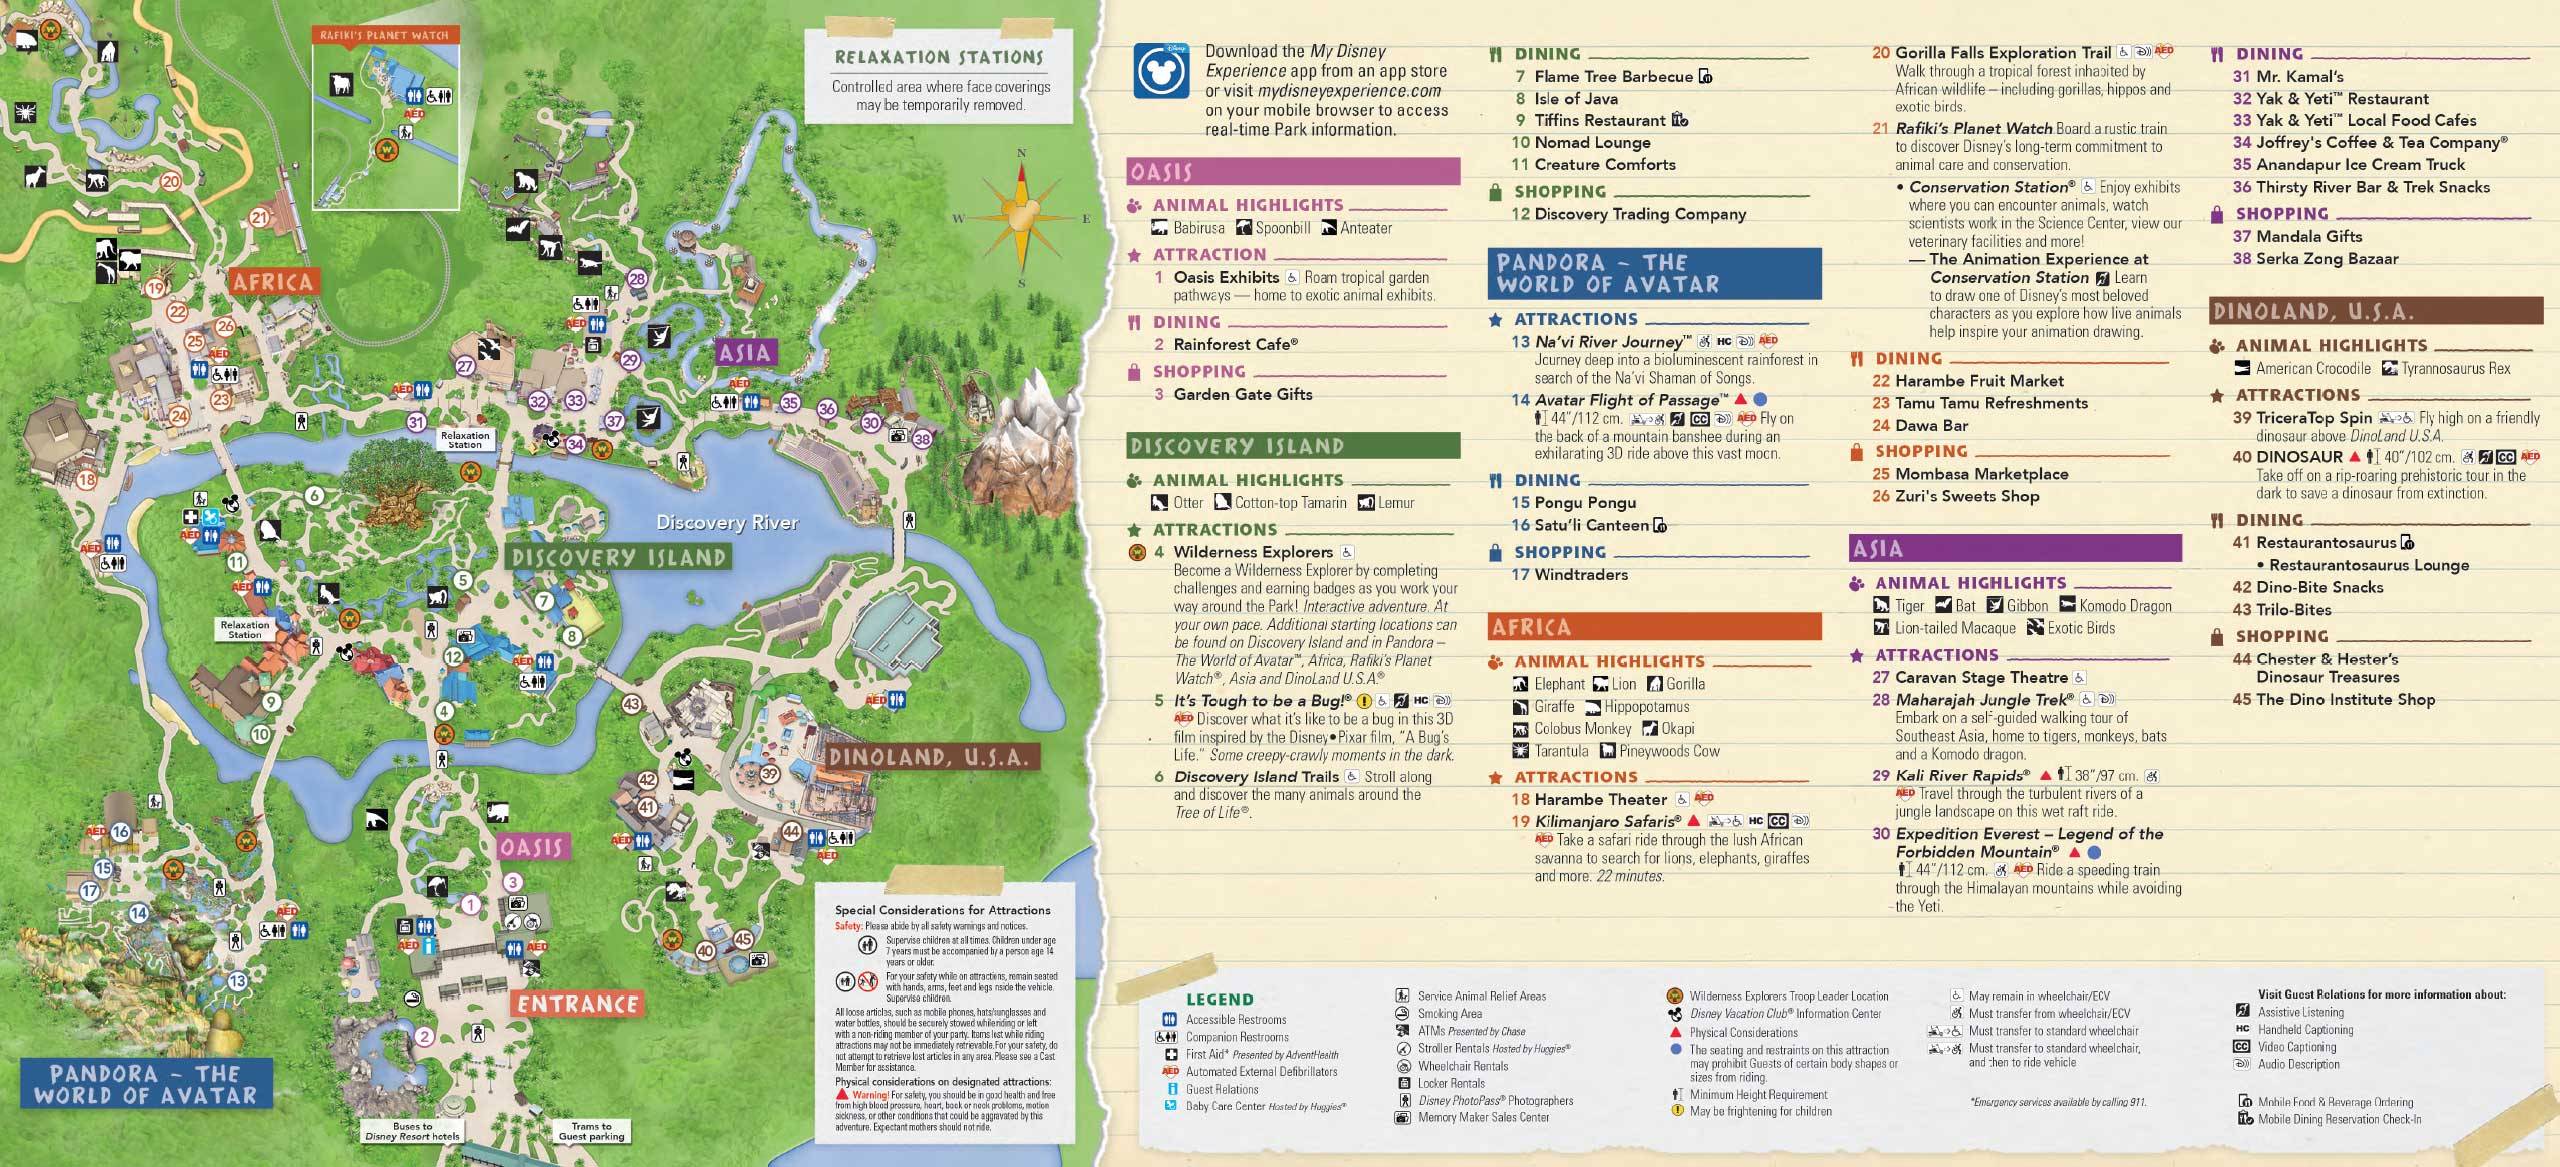 Disney's Animal Kingdom Guide Map July 2020 - Back